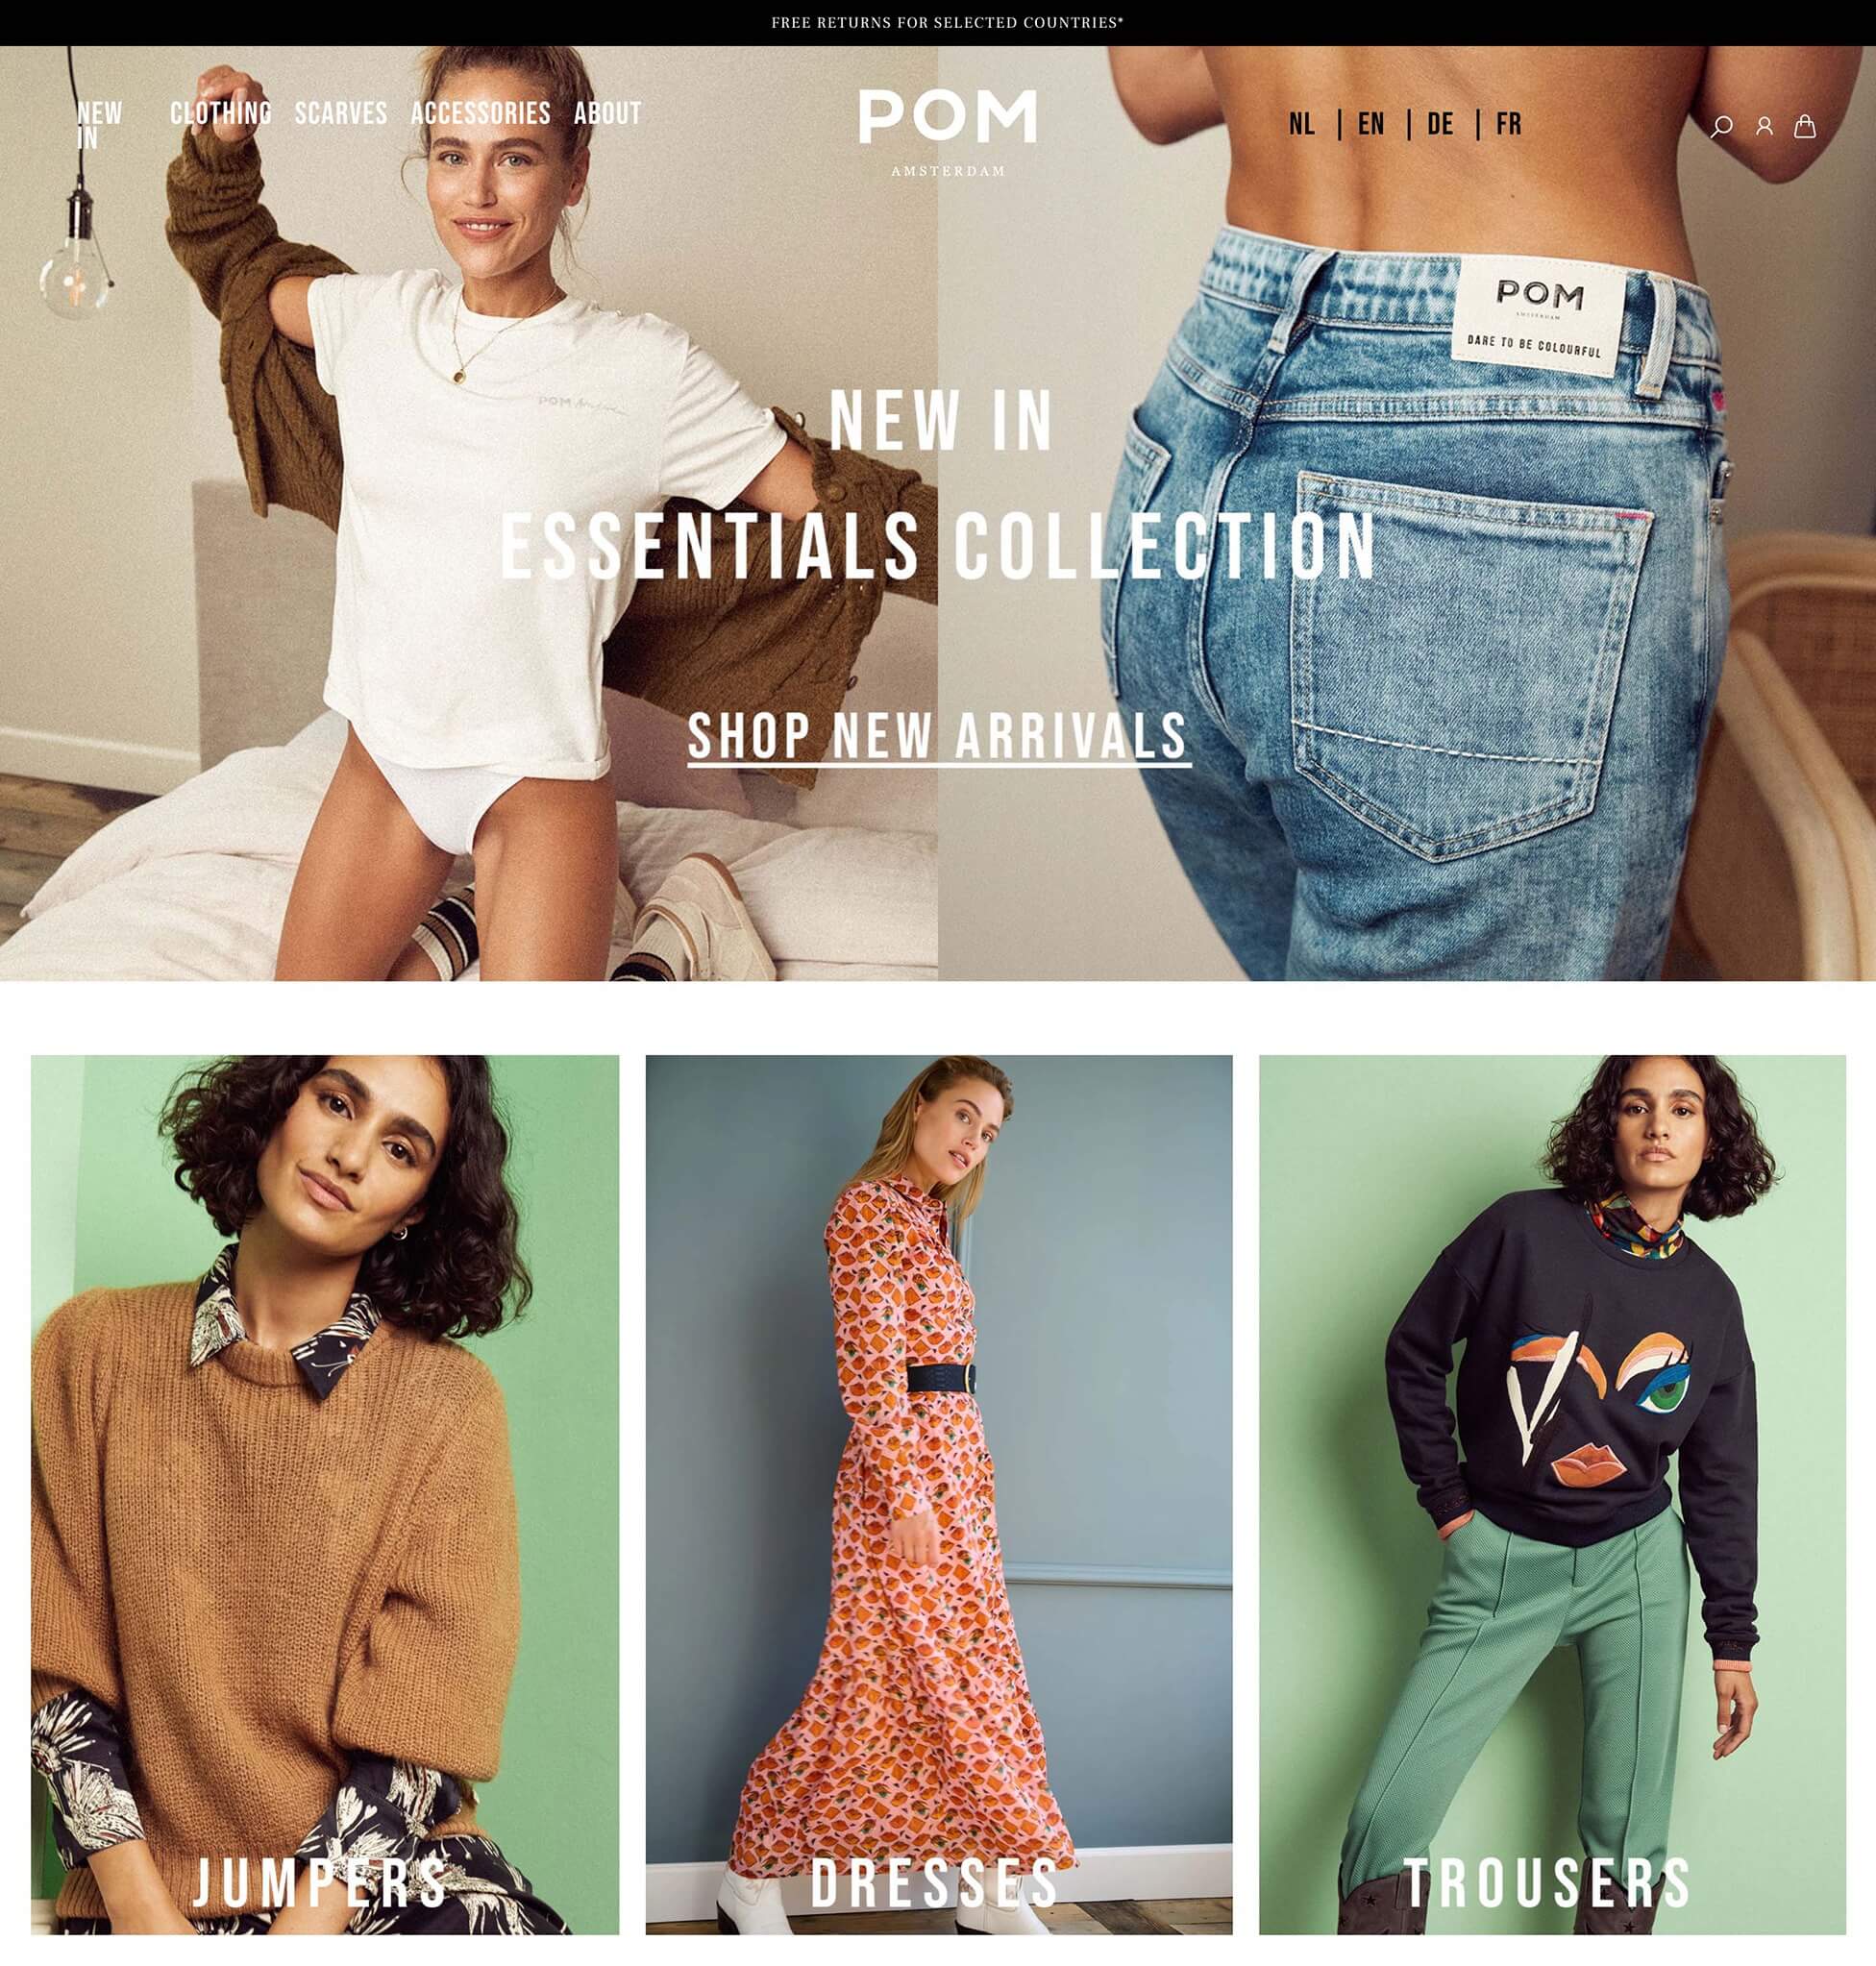 POM Amsterdam Shopify Store | Code